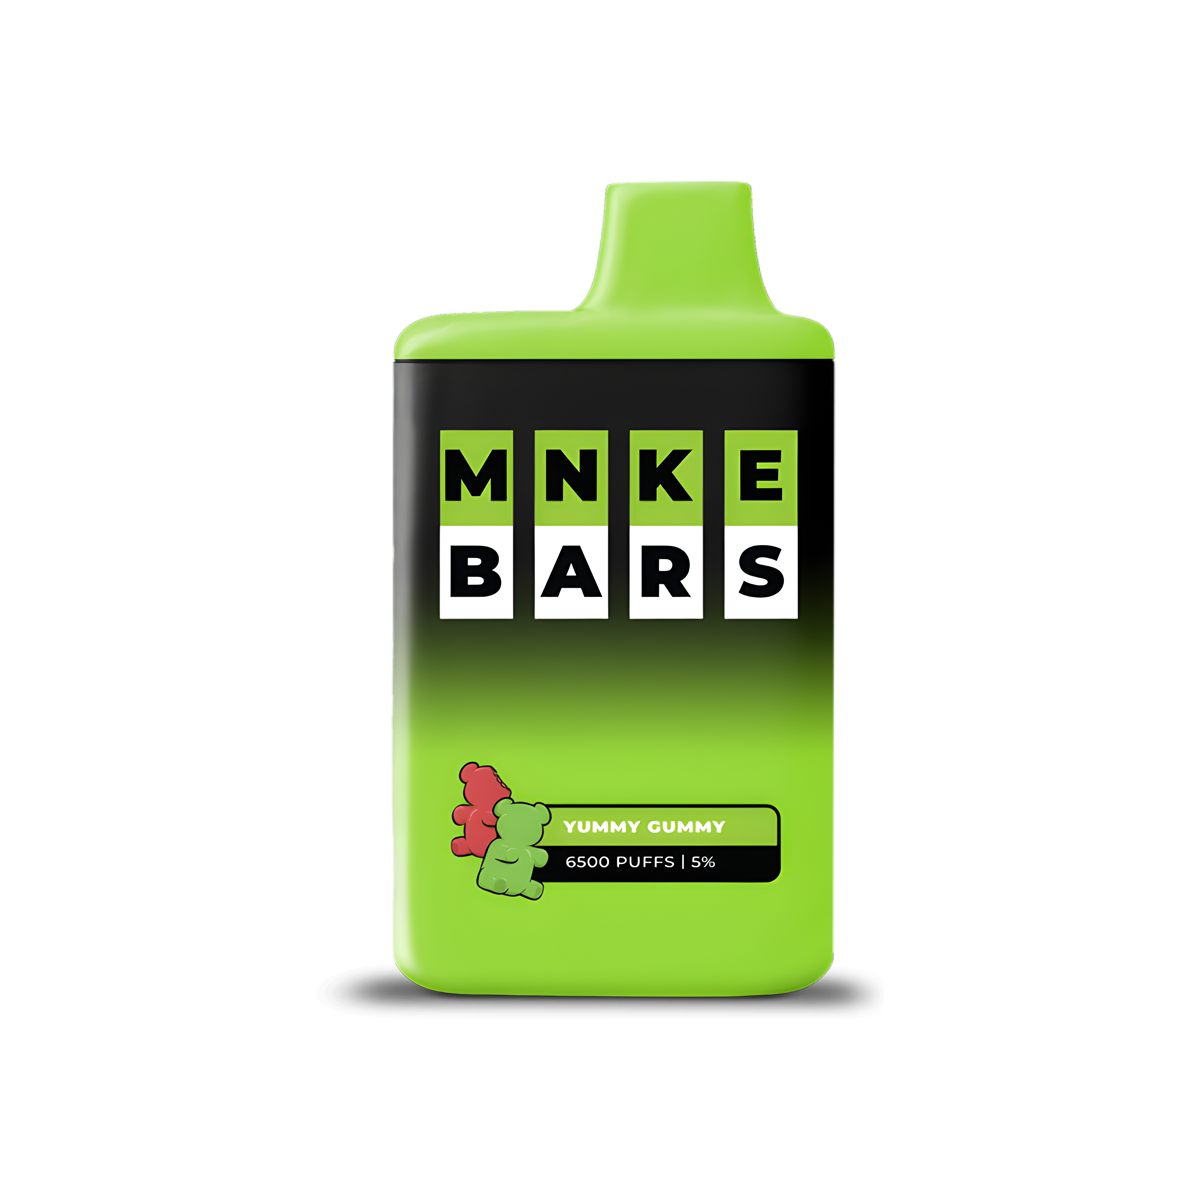 MNKE Bars 6500 Disposable Vape Yummy Gummy  